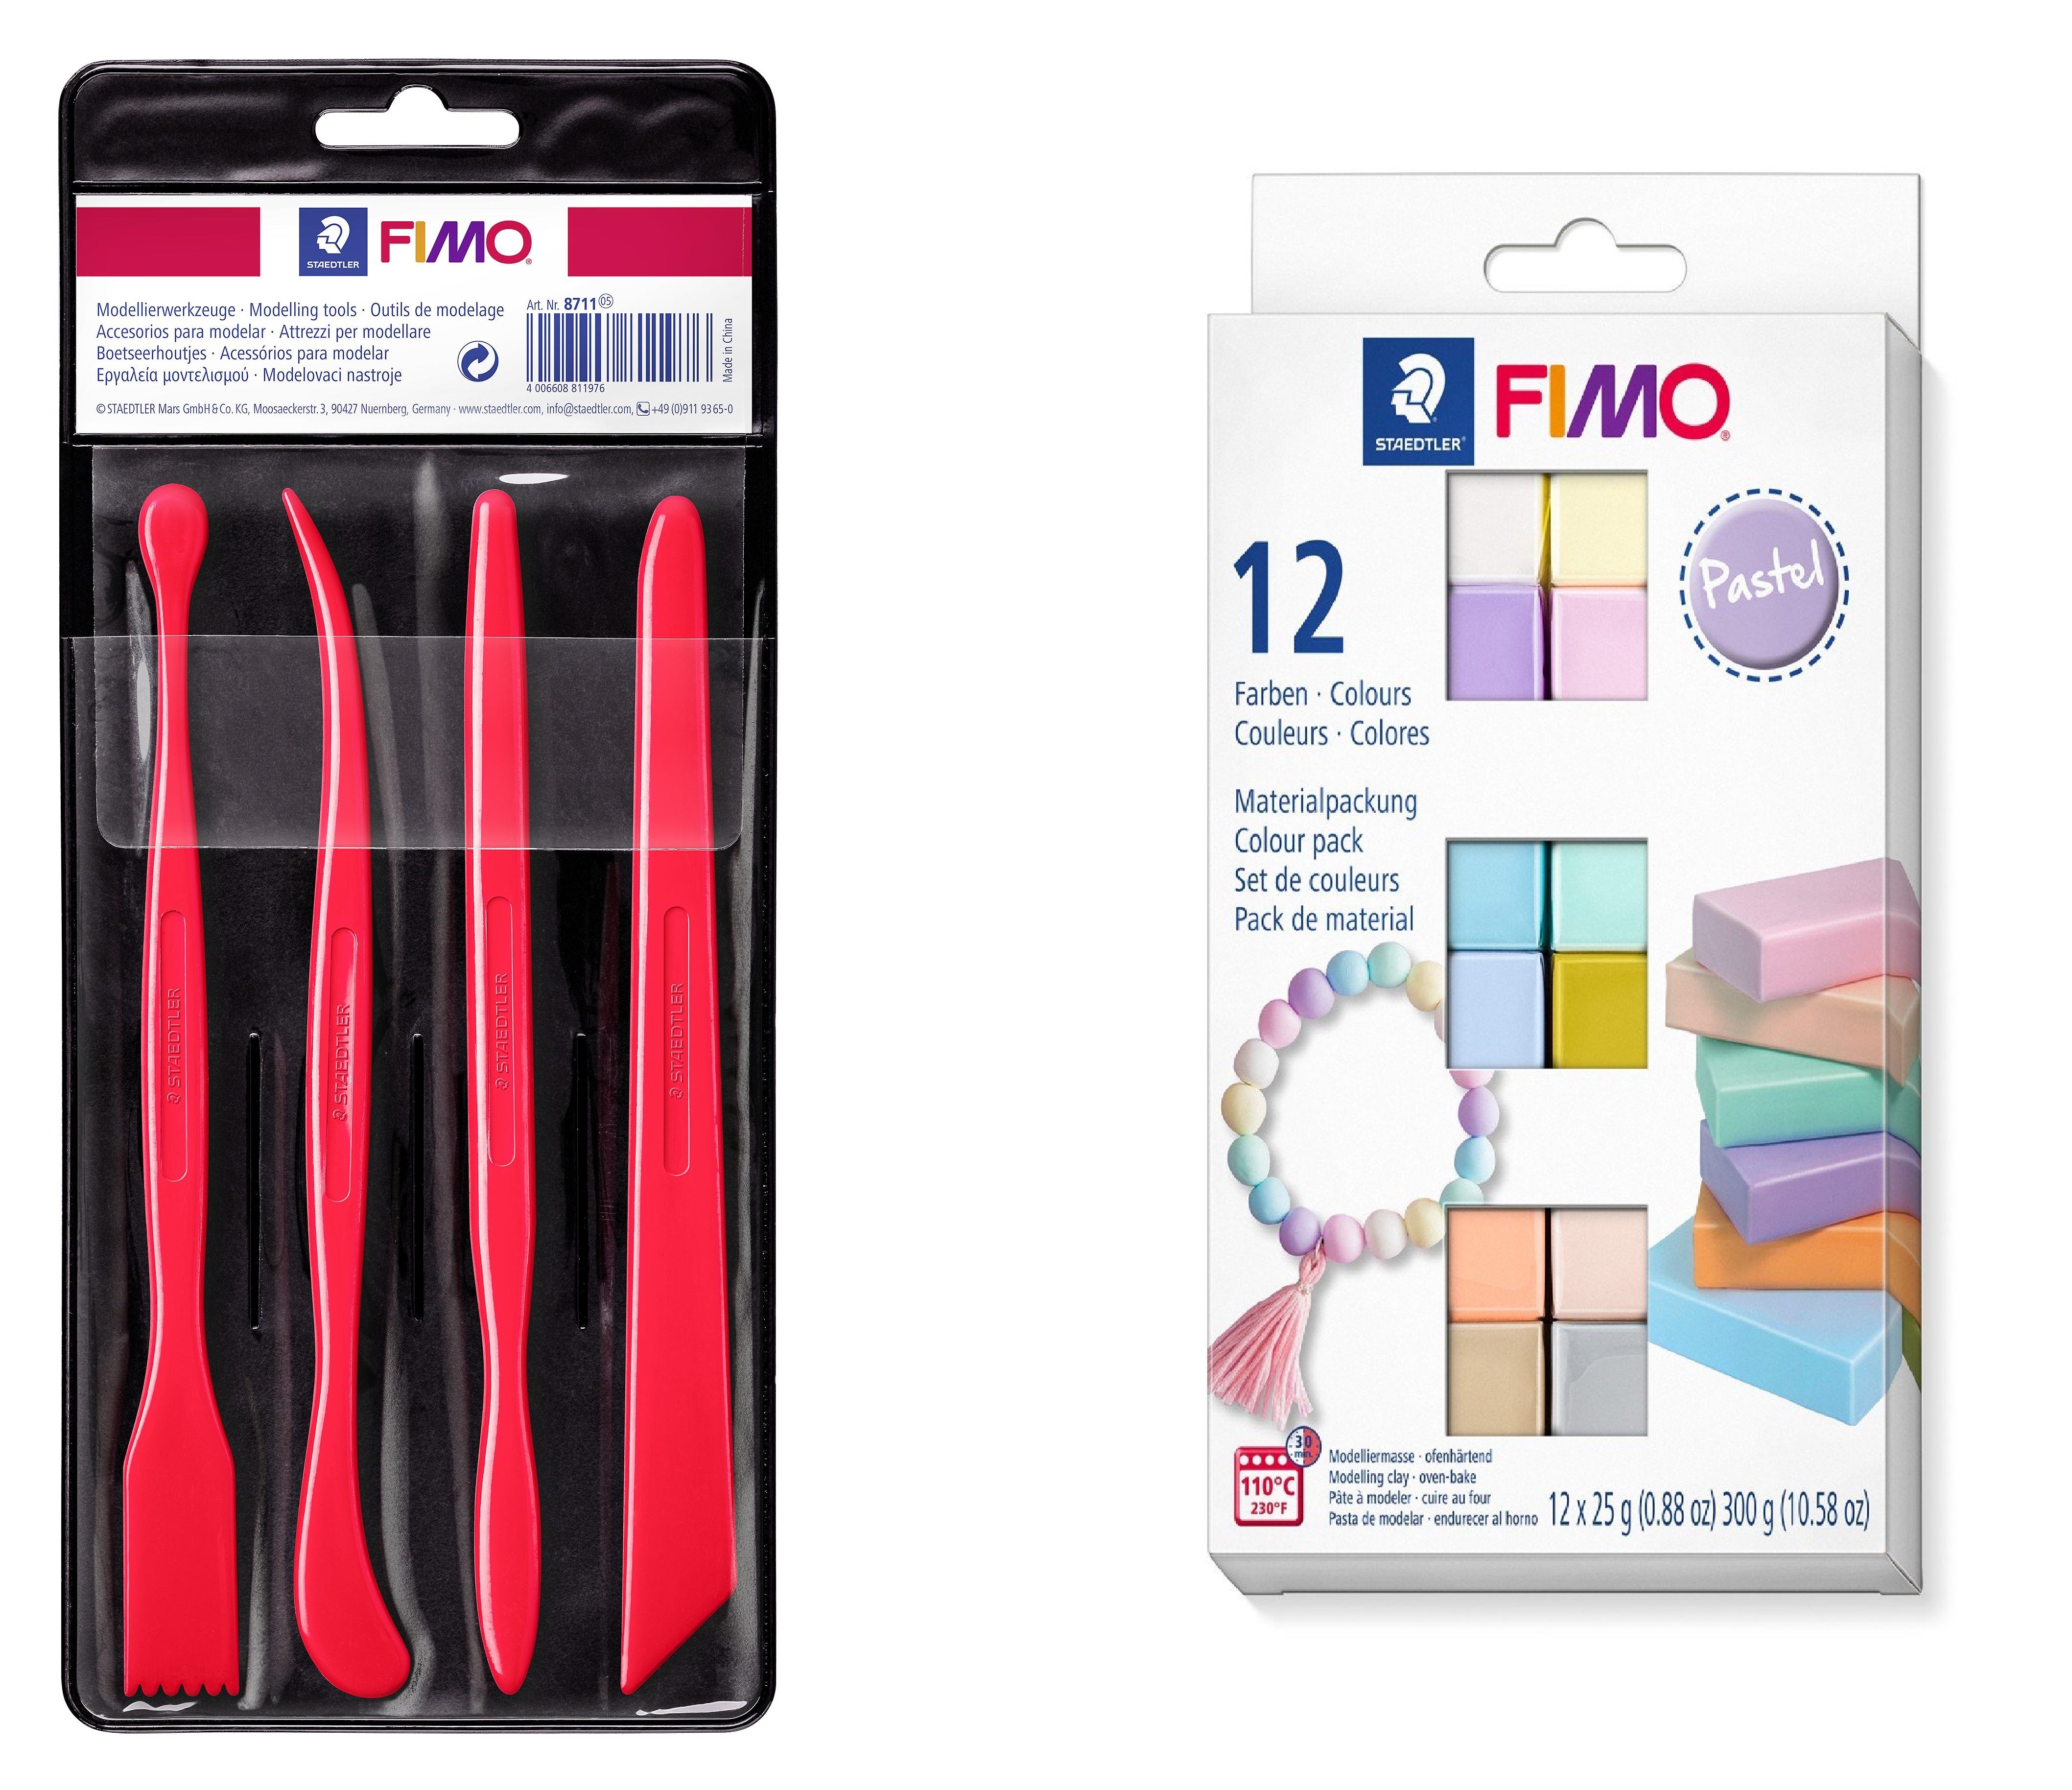 FIMO - Modeling knife set 4 pcs&Soft Set 12x25g Pastel - Leker